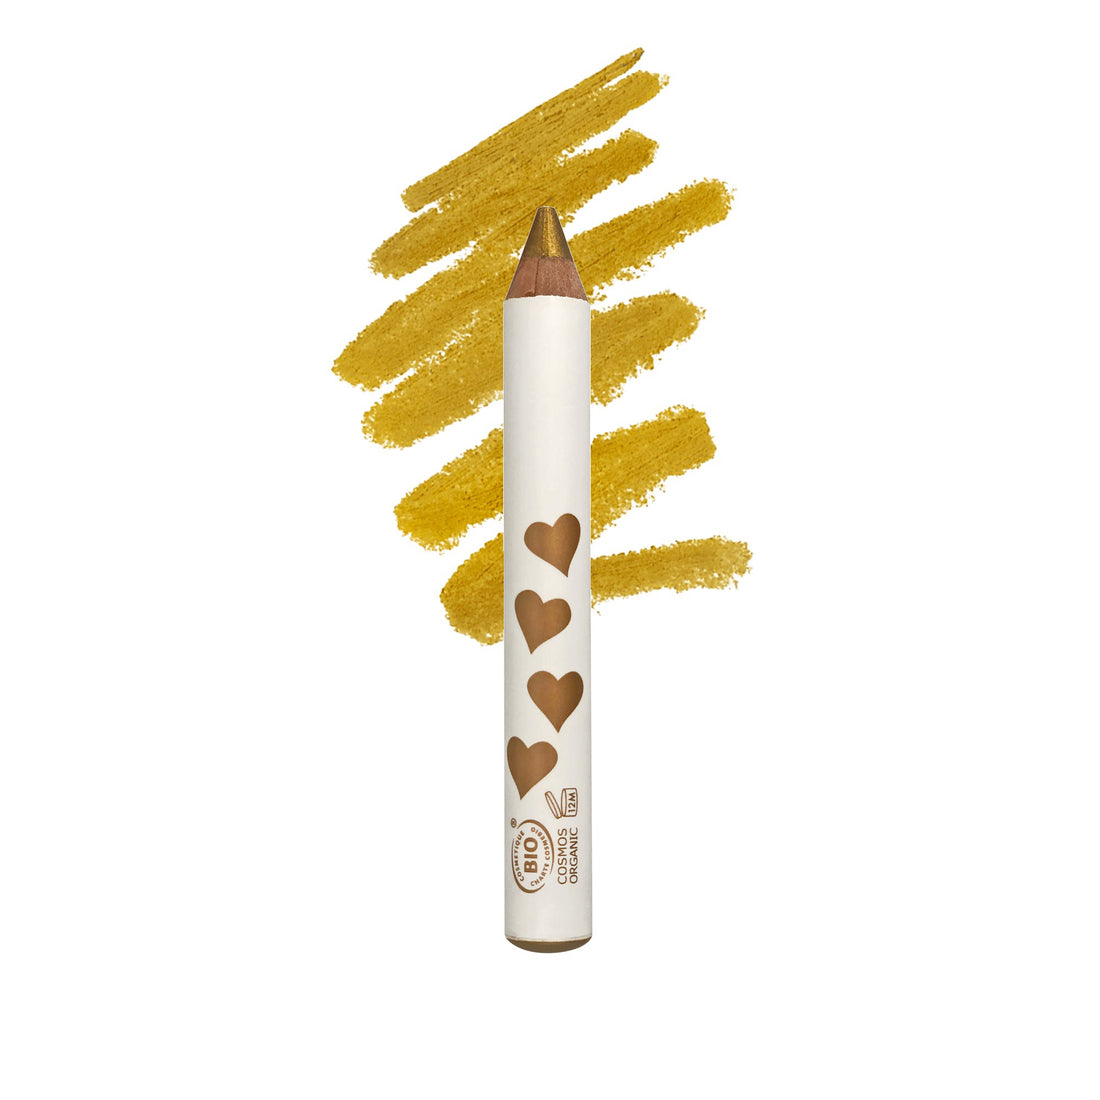 inuwet-make-up-pencil-organic-certified-gold-n04-inuw-vincr04